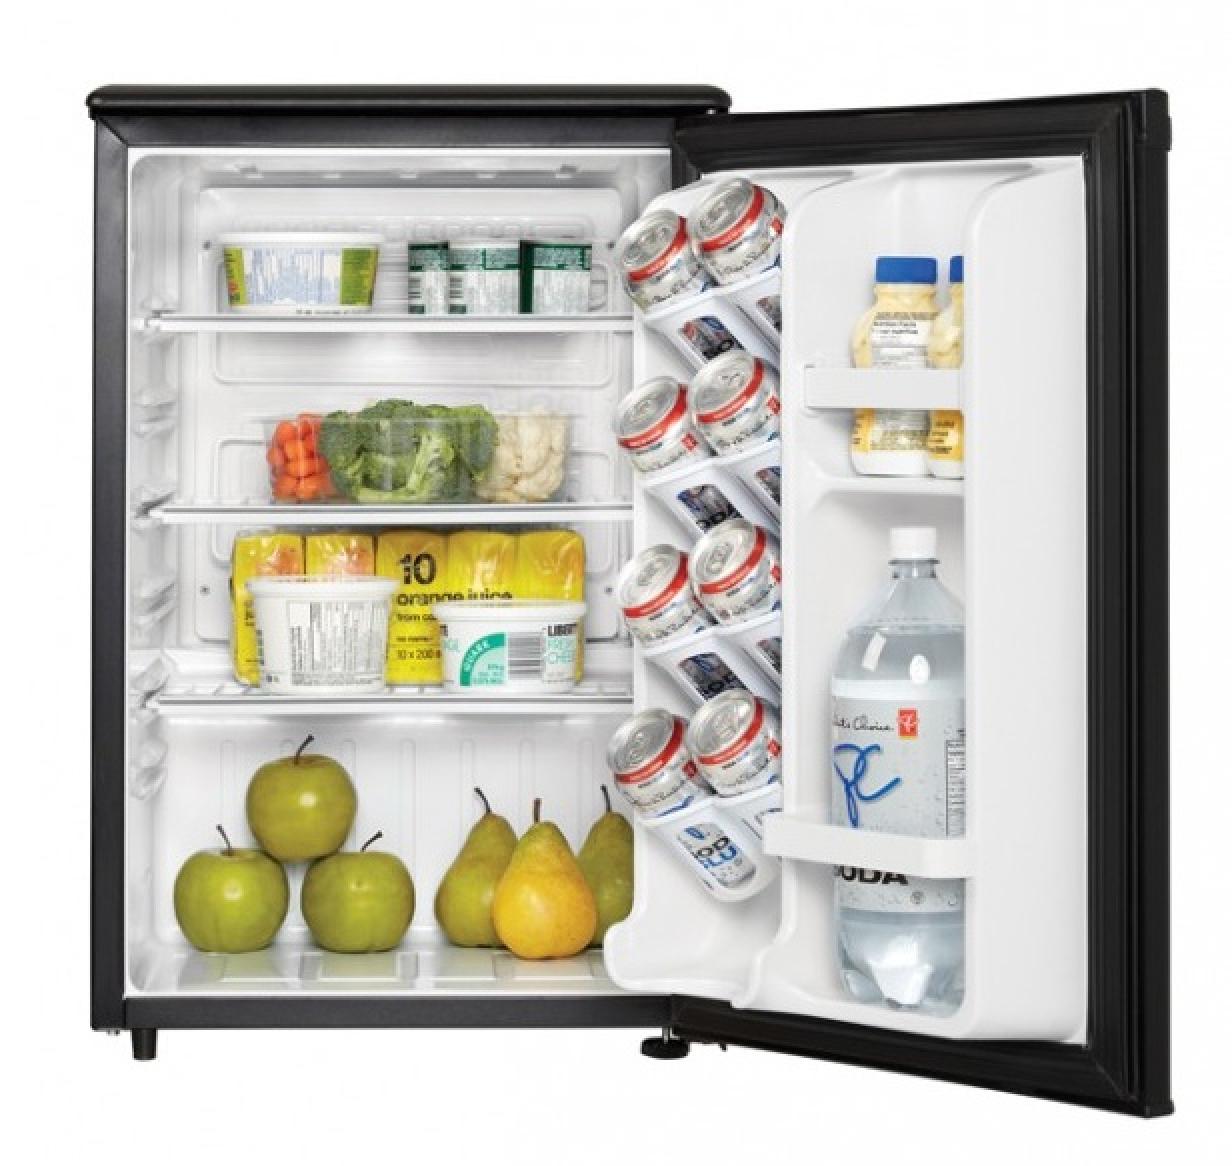 Danby Designer 2.6 cu. ft. Compact Refrigerator